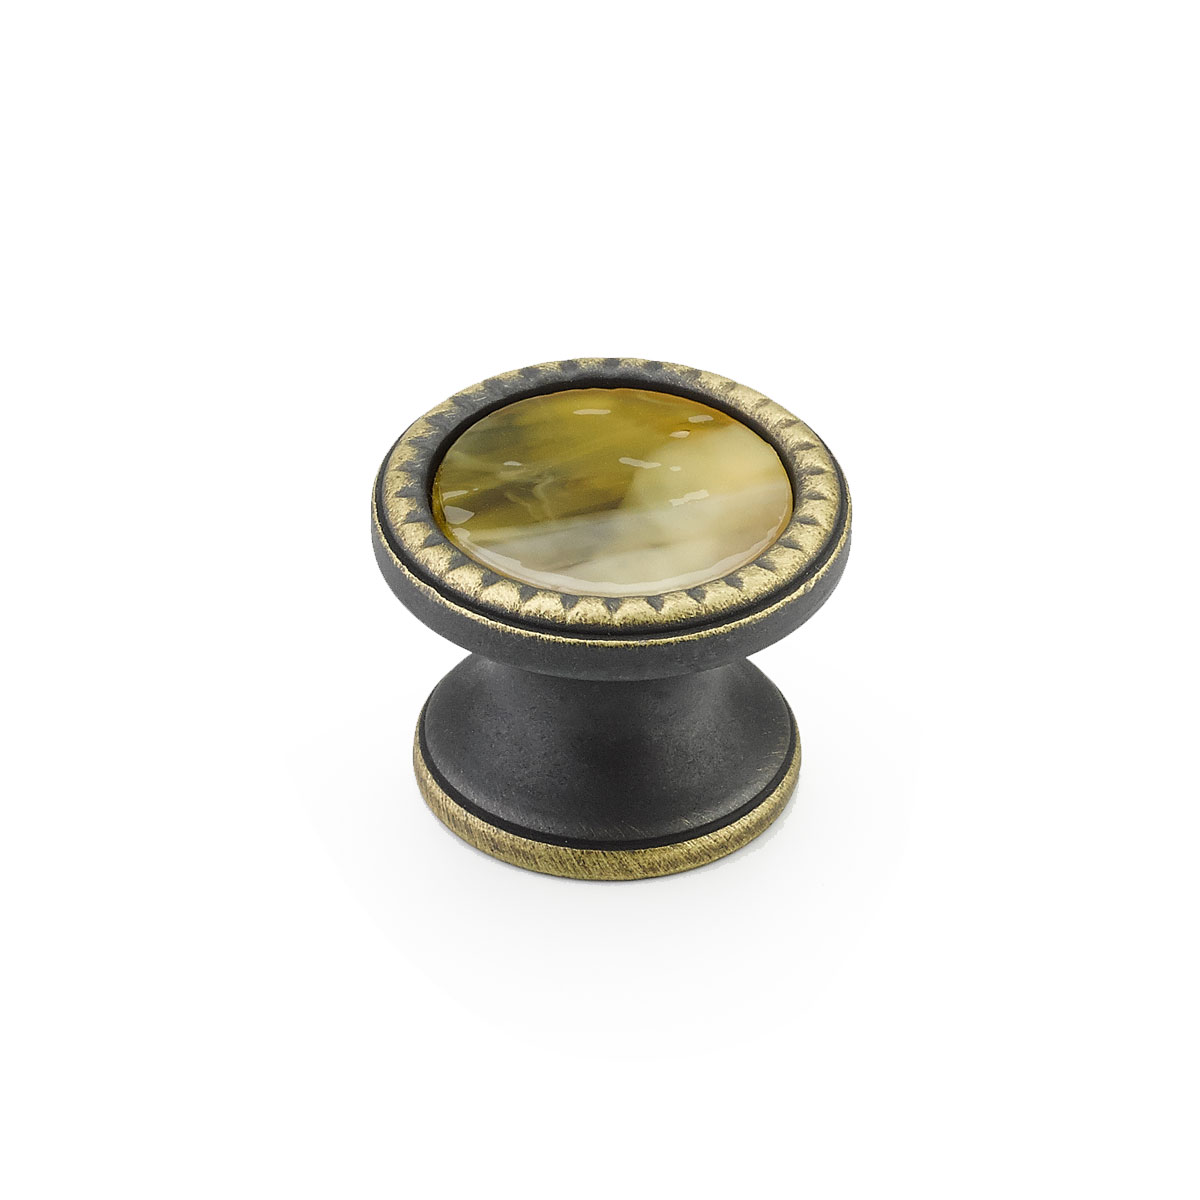 Schaub 20-ABZ-CL Round Knob, Ancient Bronze, Chaparral Glass Inlay, 1-1/4" Dia - Ancient Bronze